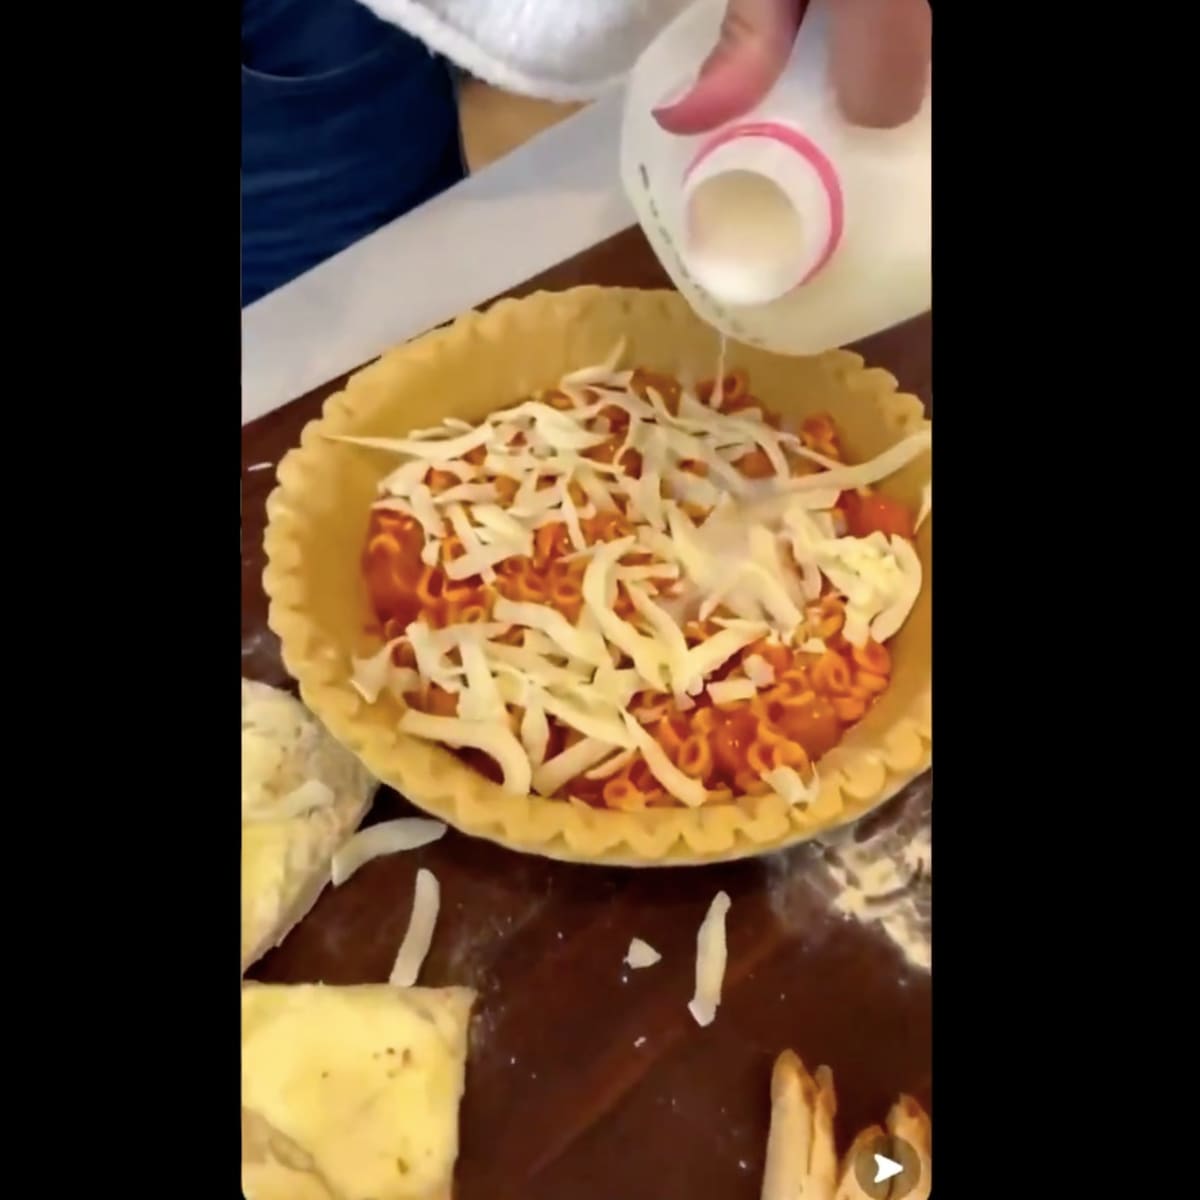 Minnesota Woman's Foul SpaghettiOs Pie Video Goes Viral